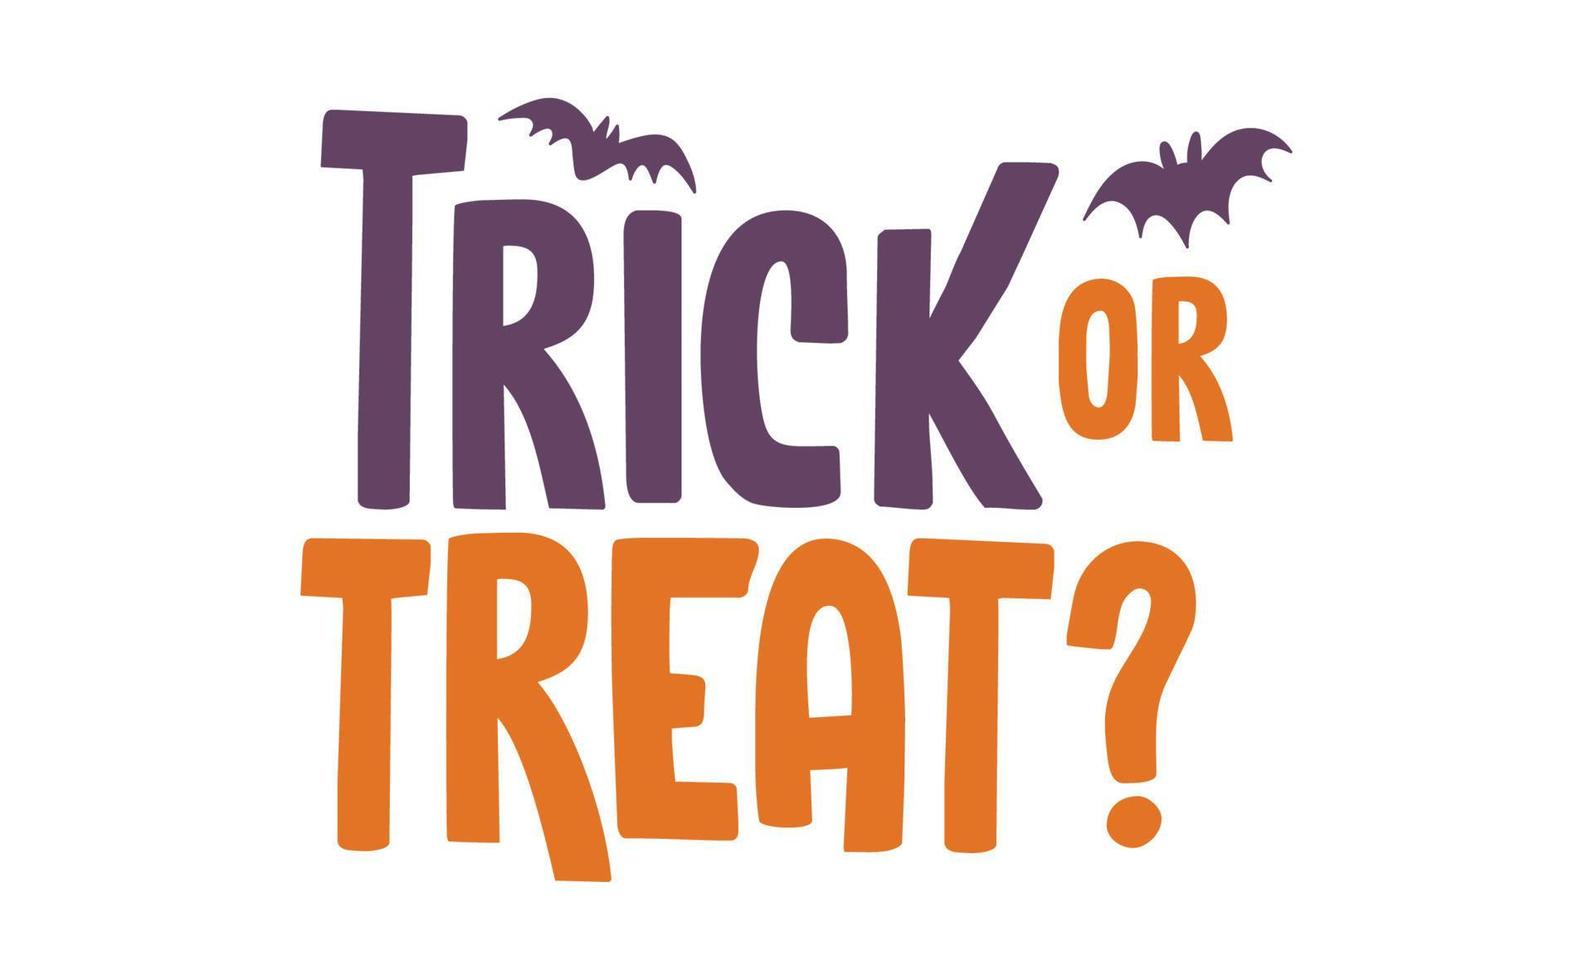 Trick or treat lettering design. Halloween message. vector